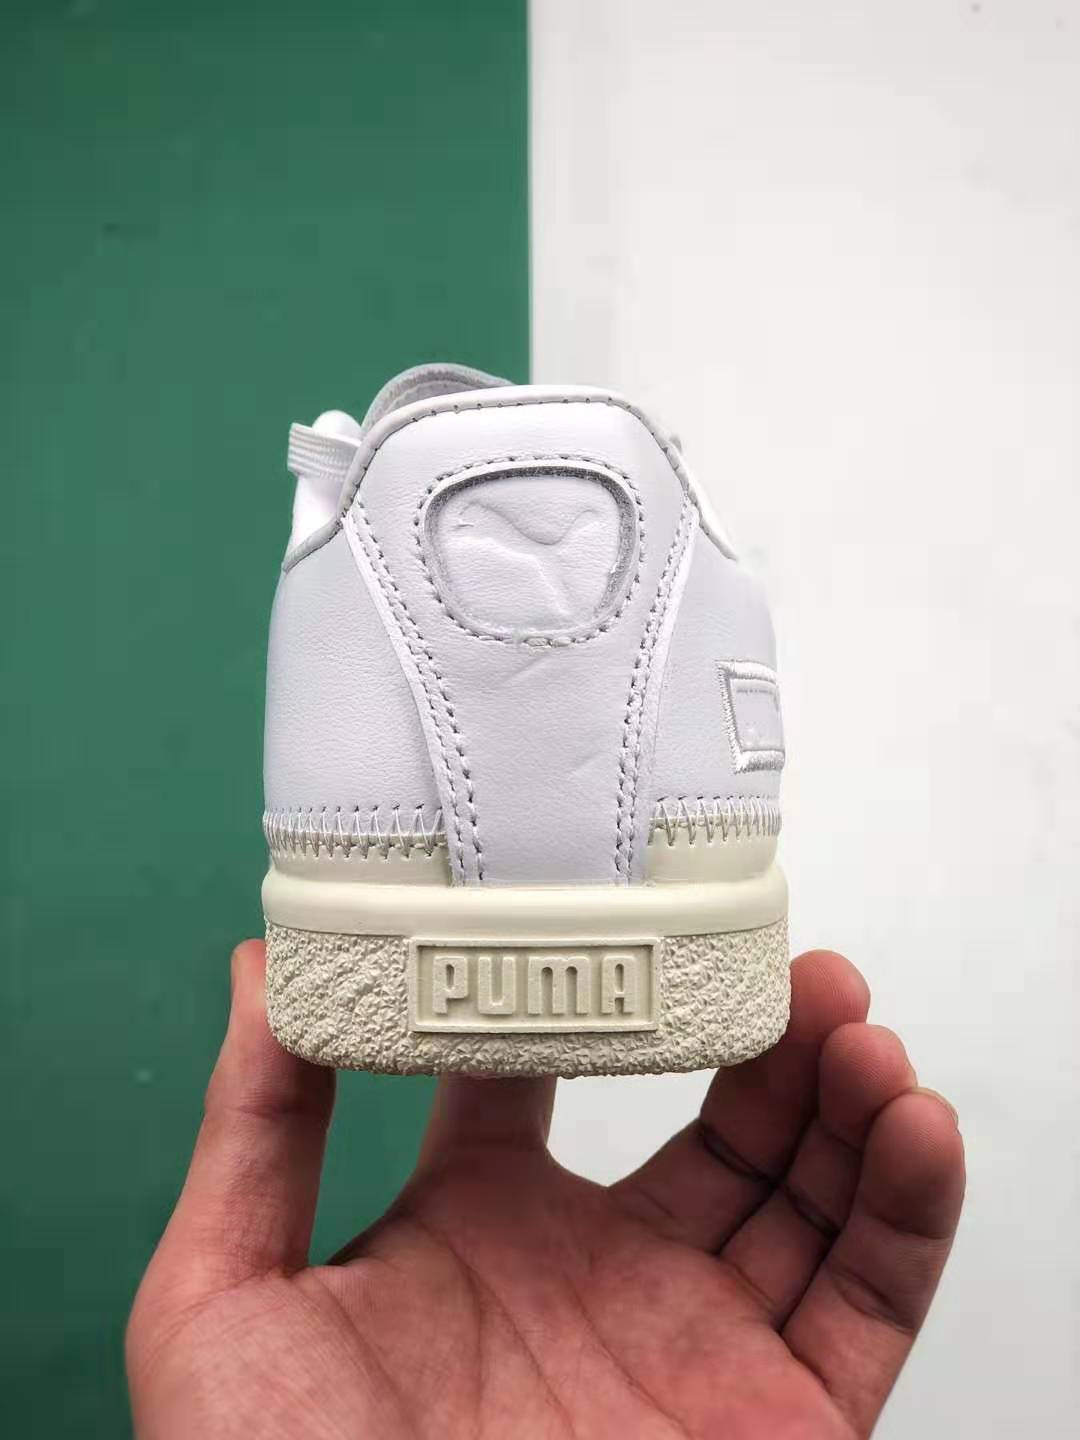 PUMA Basket Stitched White 368387-01: Classic Style with a Modern Twist